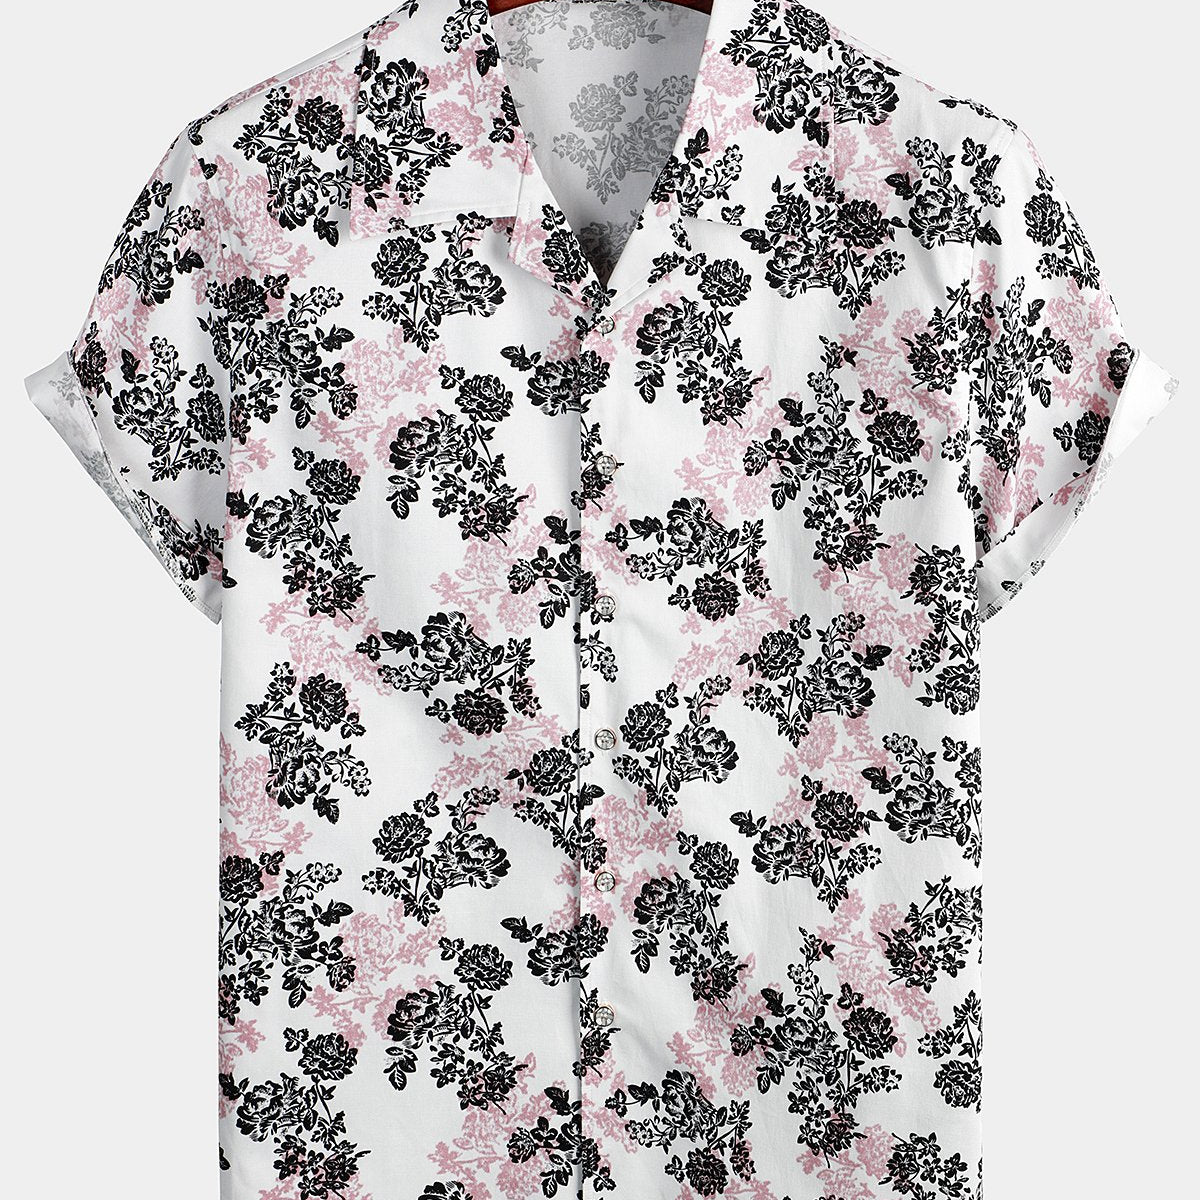 Men's Holiday Floral Print Short Sleeve Shirt